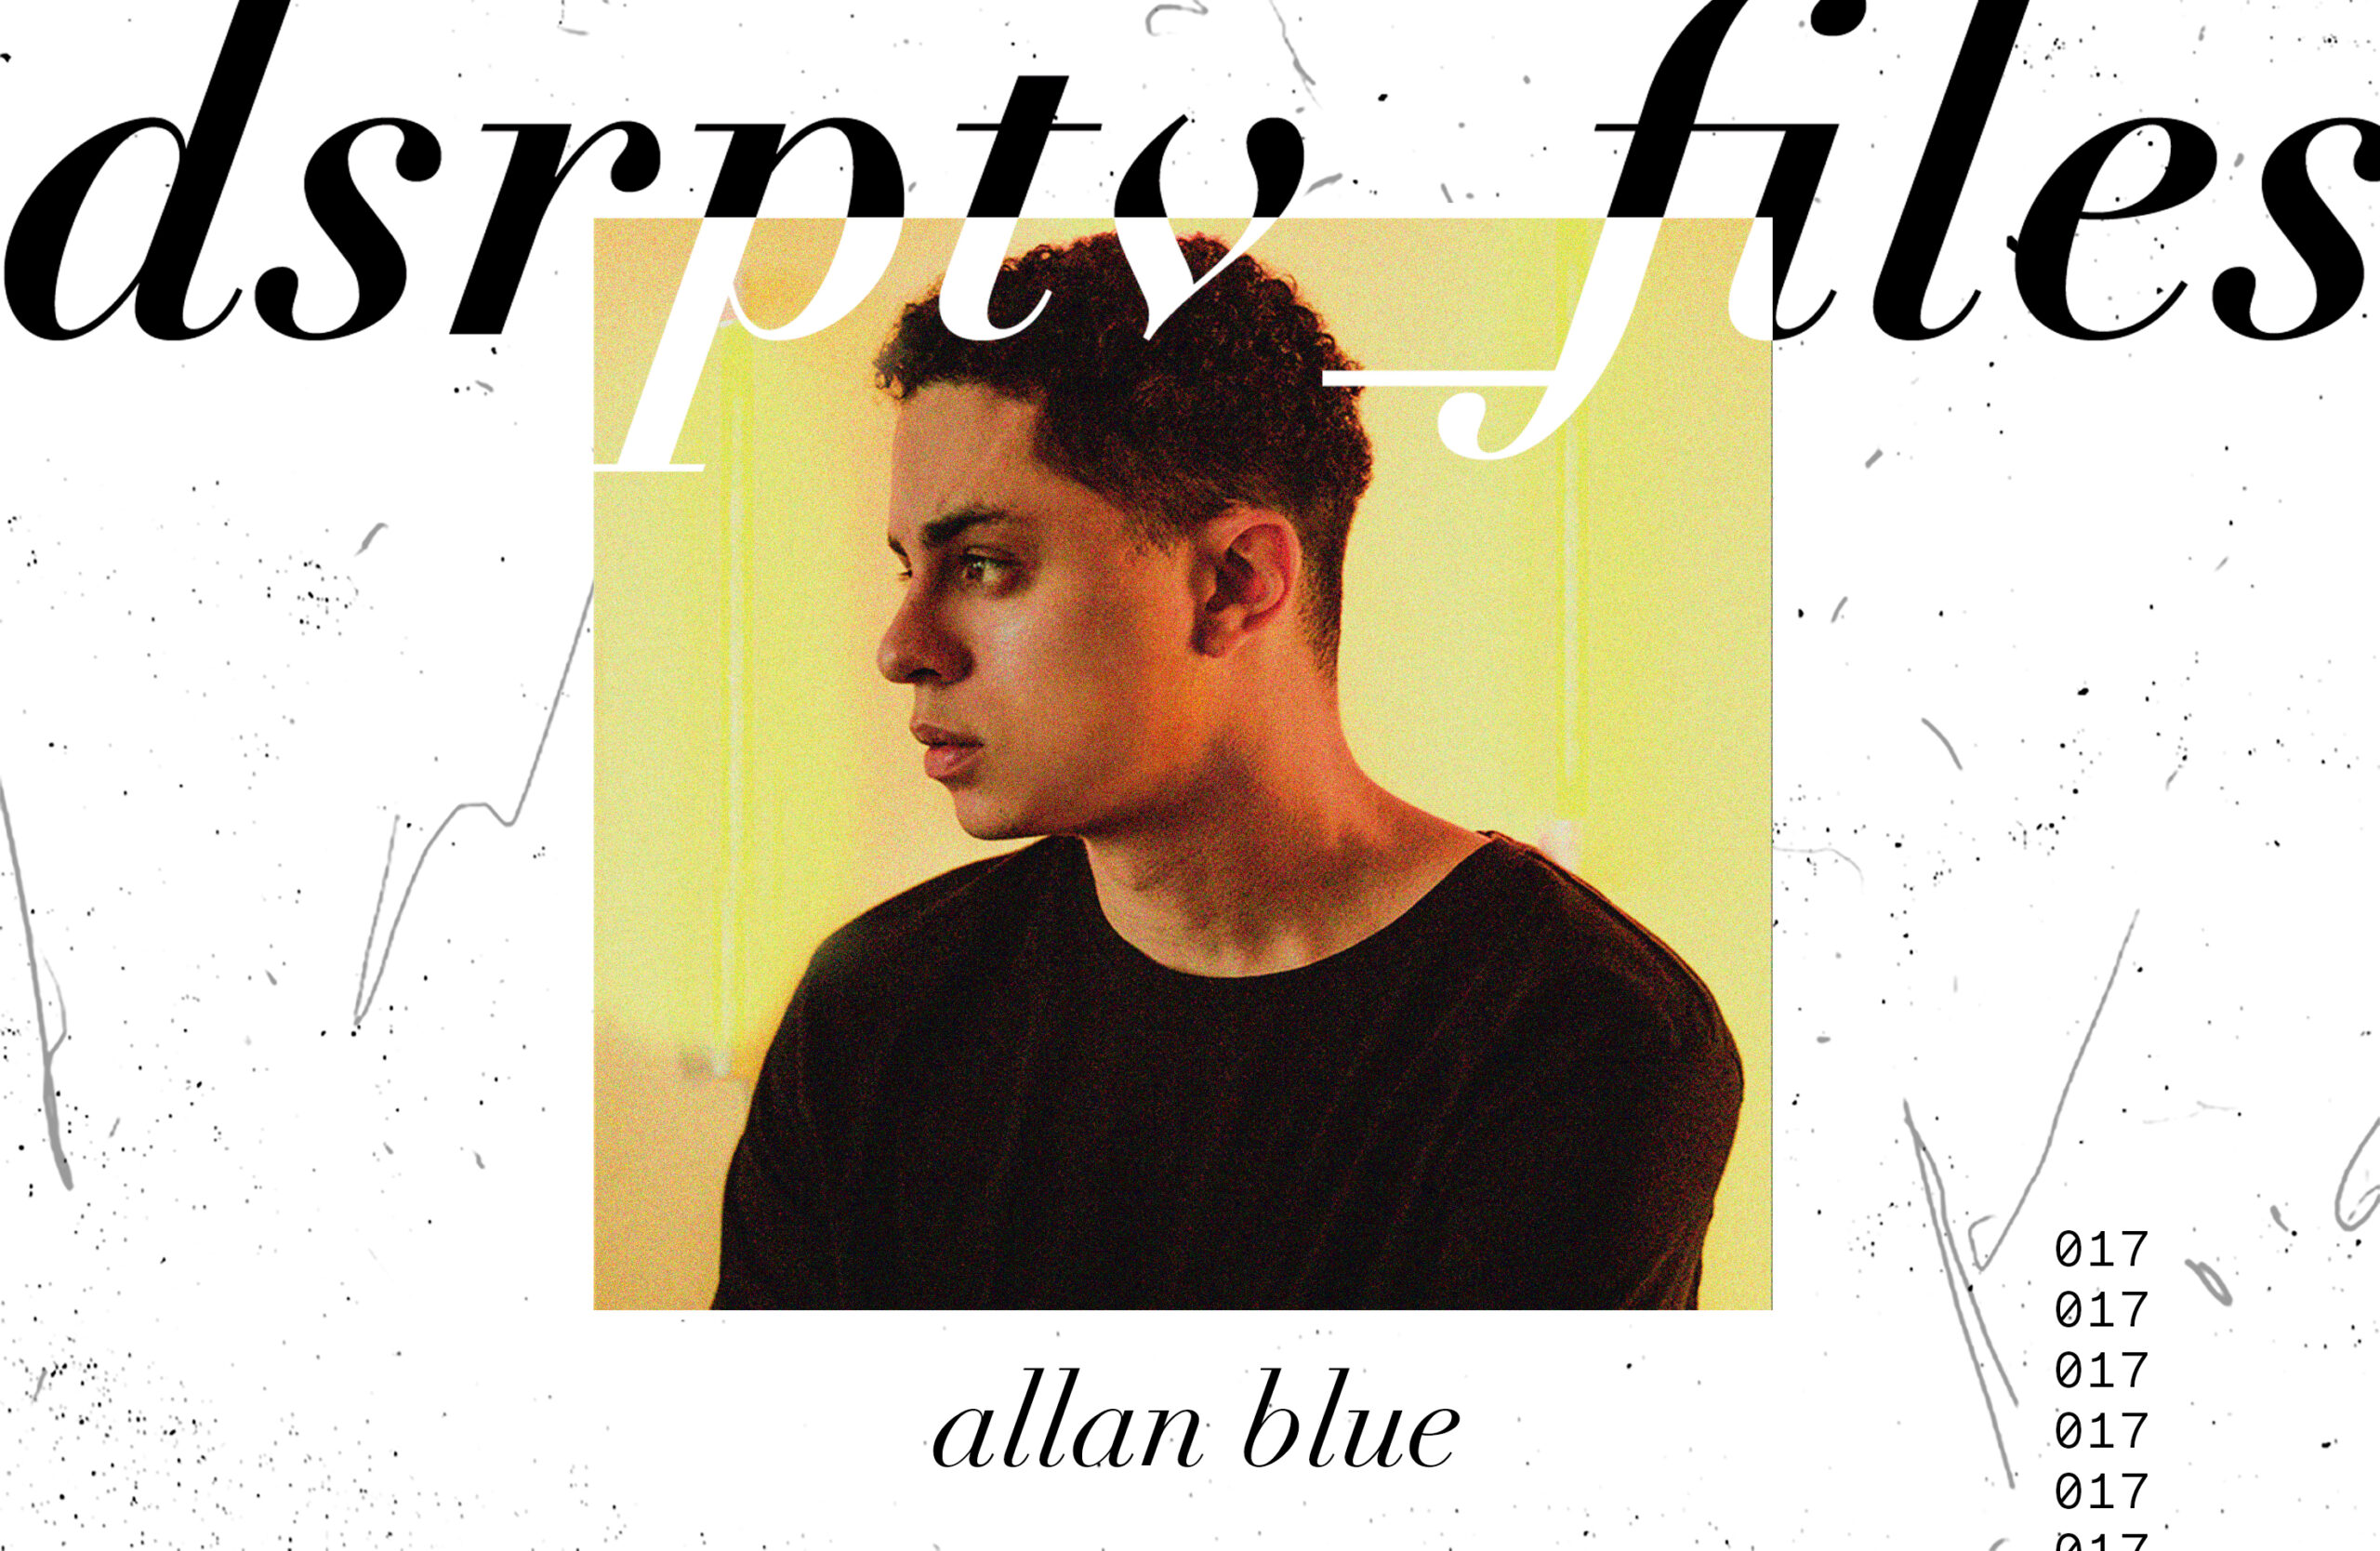 dsrptv_files – Allan Blue